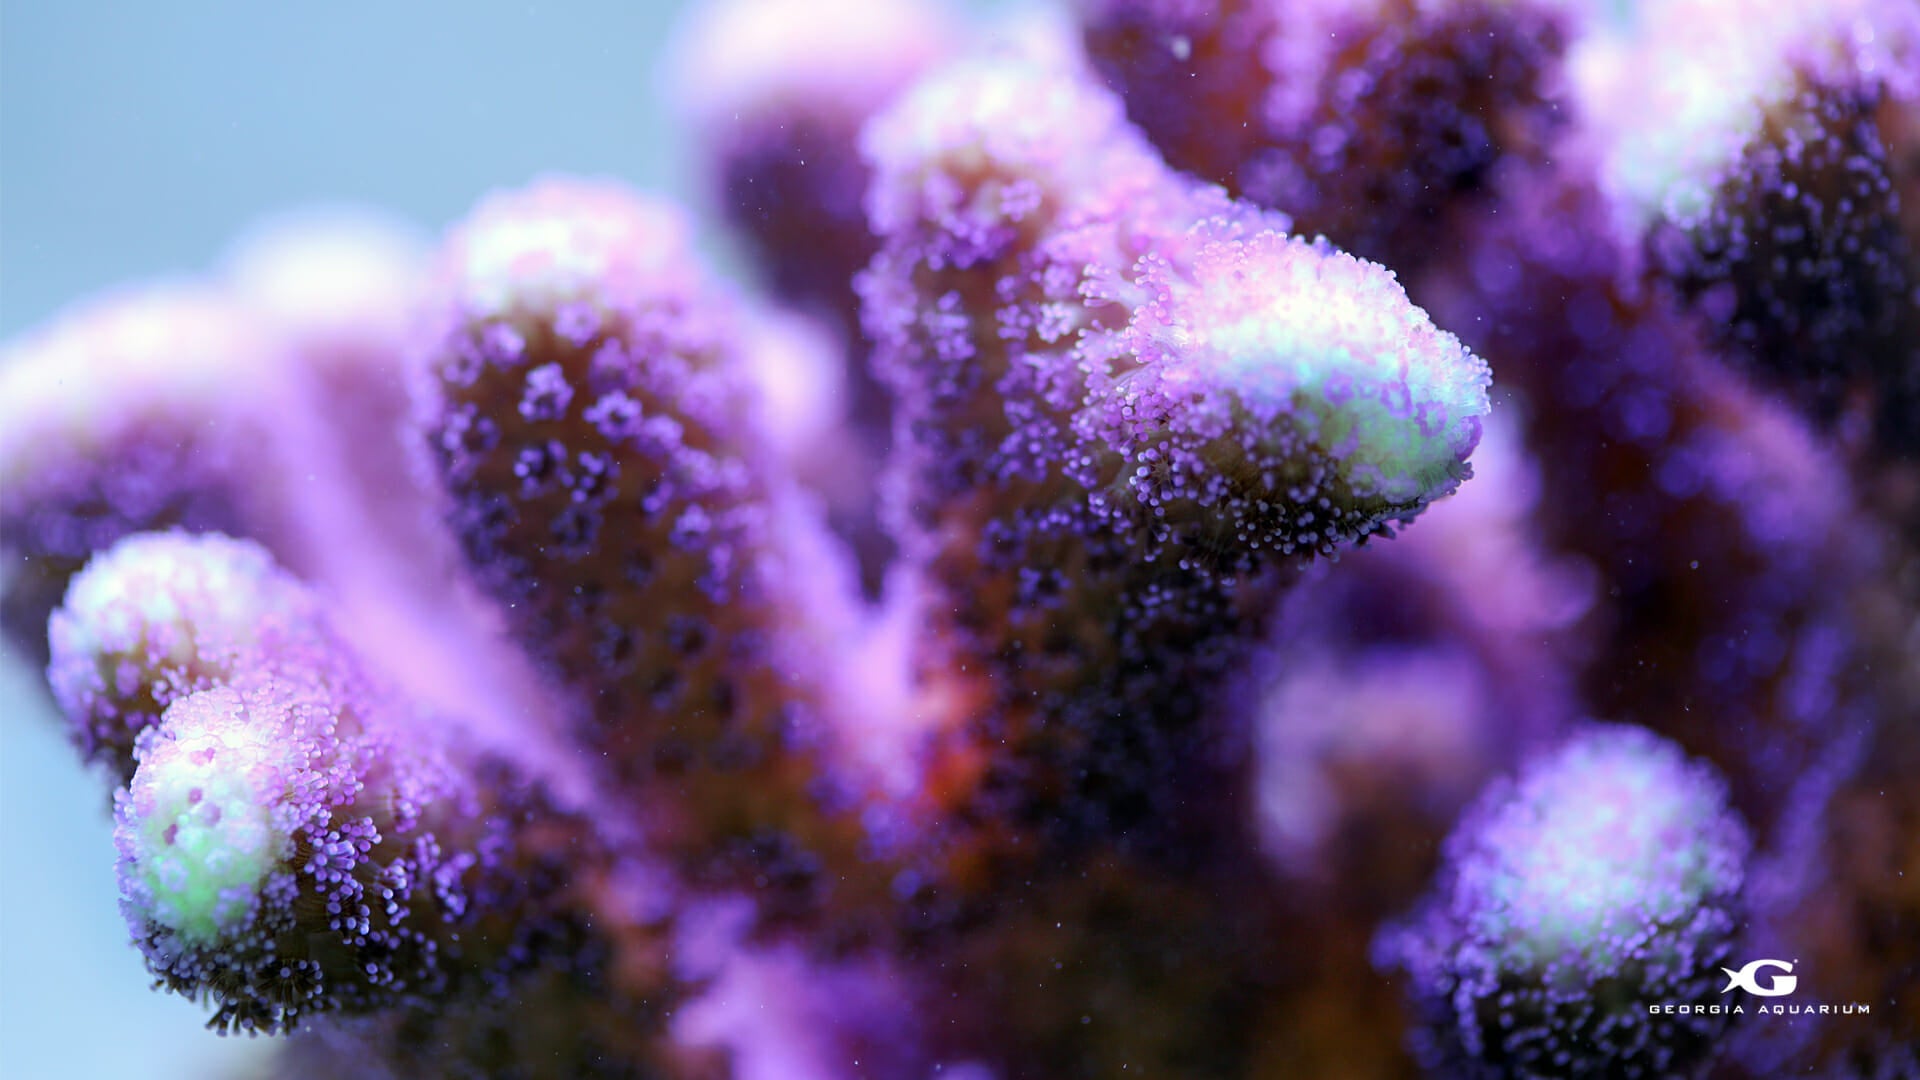 Coral reefer 420